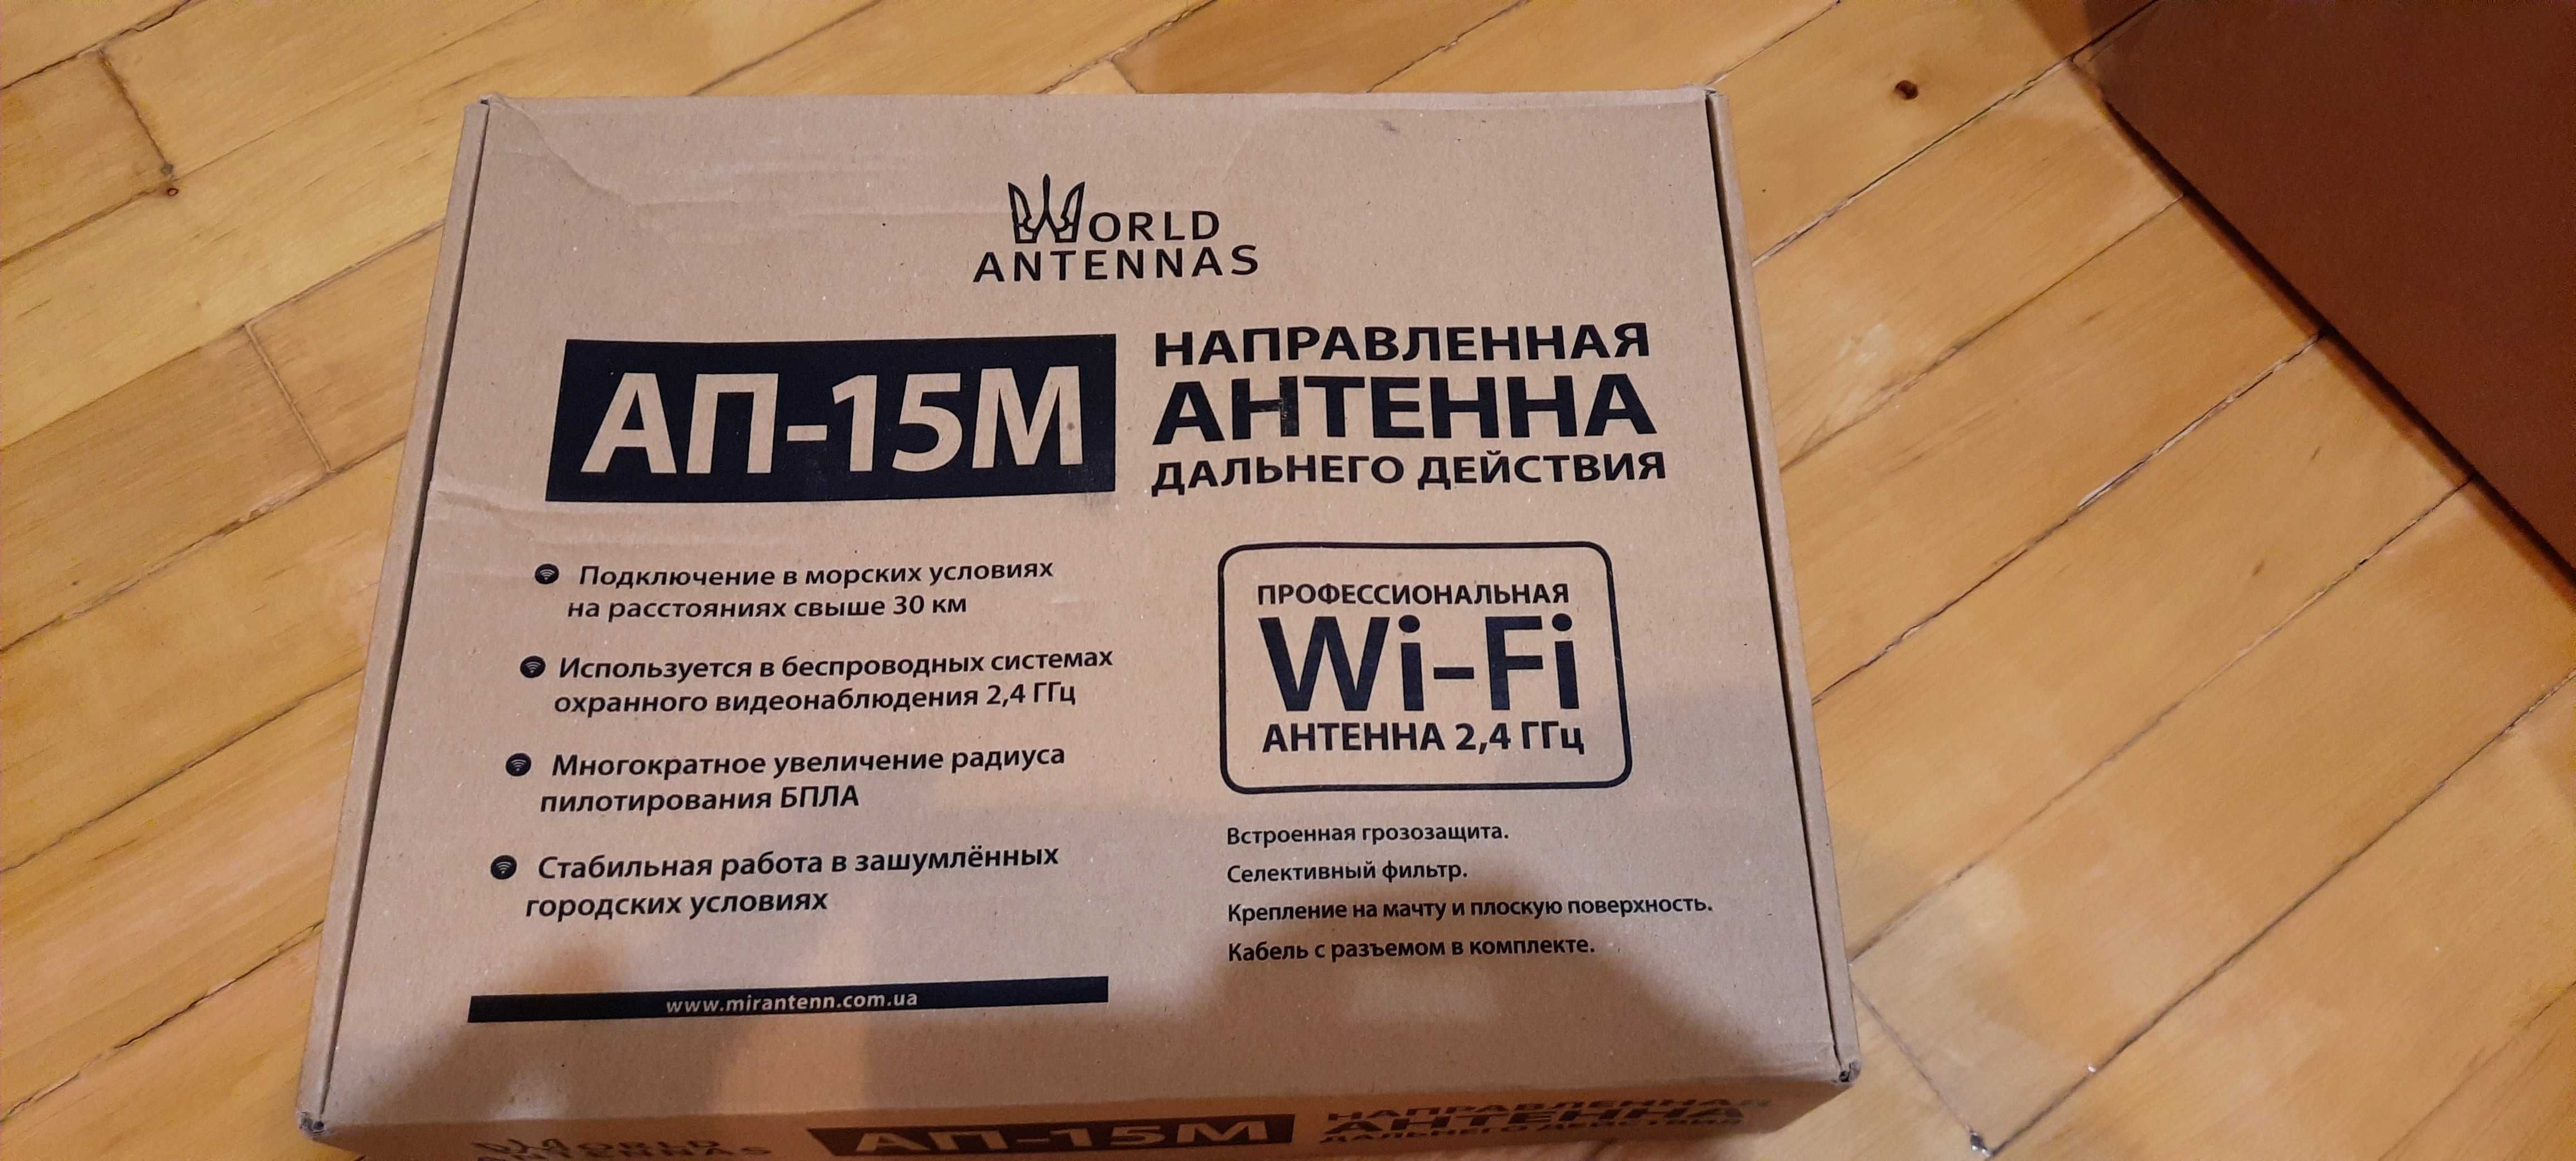 Антенна АП-15М Wi-Fi 2,4ГГЦ, узконаправленная, дальнего действия